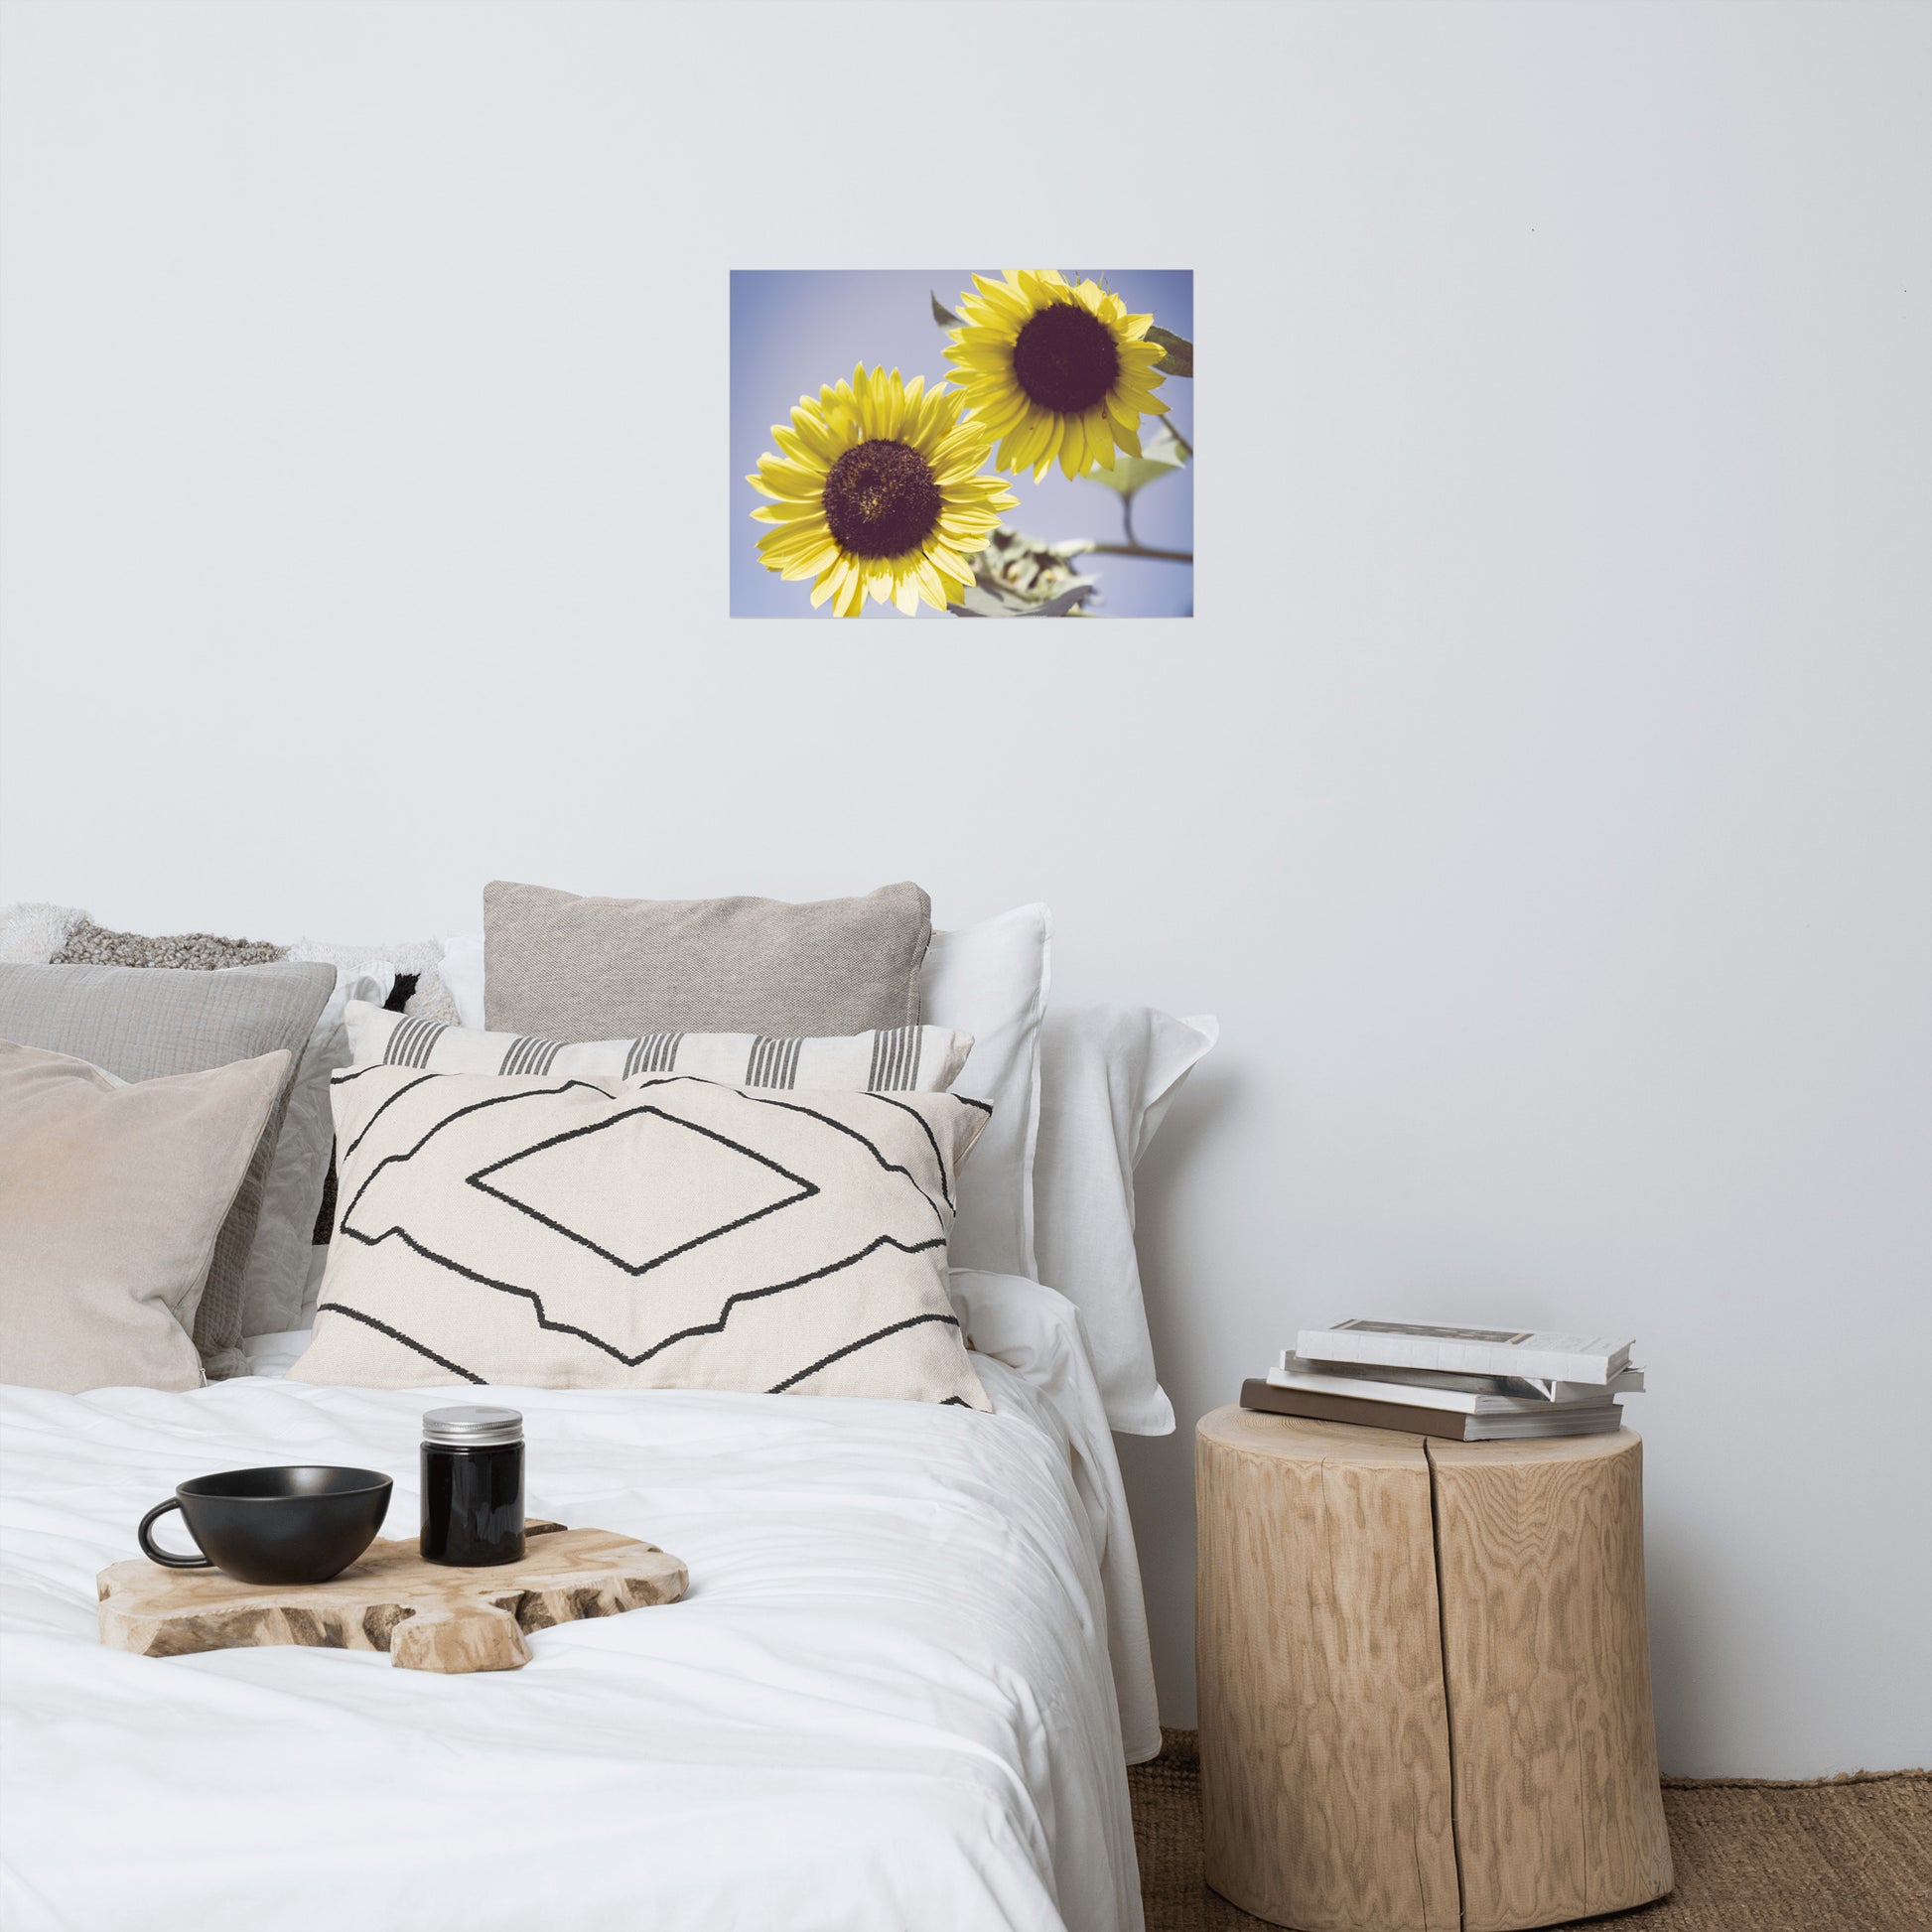 Minimalist Flower Prints: Aged Sunflowers Against Sky - Botanical / Floral / Flora / Flowers / Nature Photograph Loose / Unframed / Frameable / Frameless Wall Art Print - Artwork